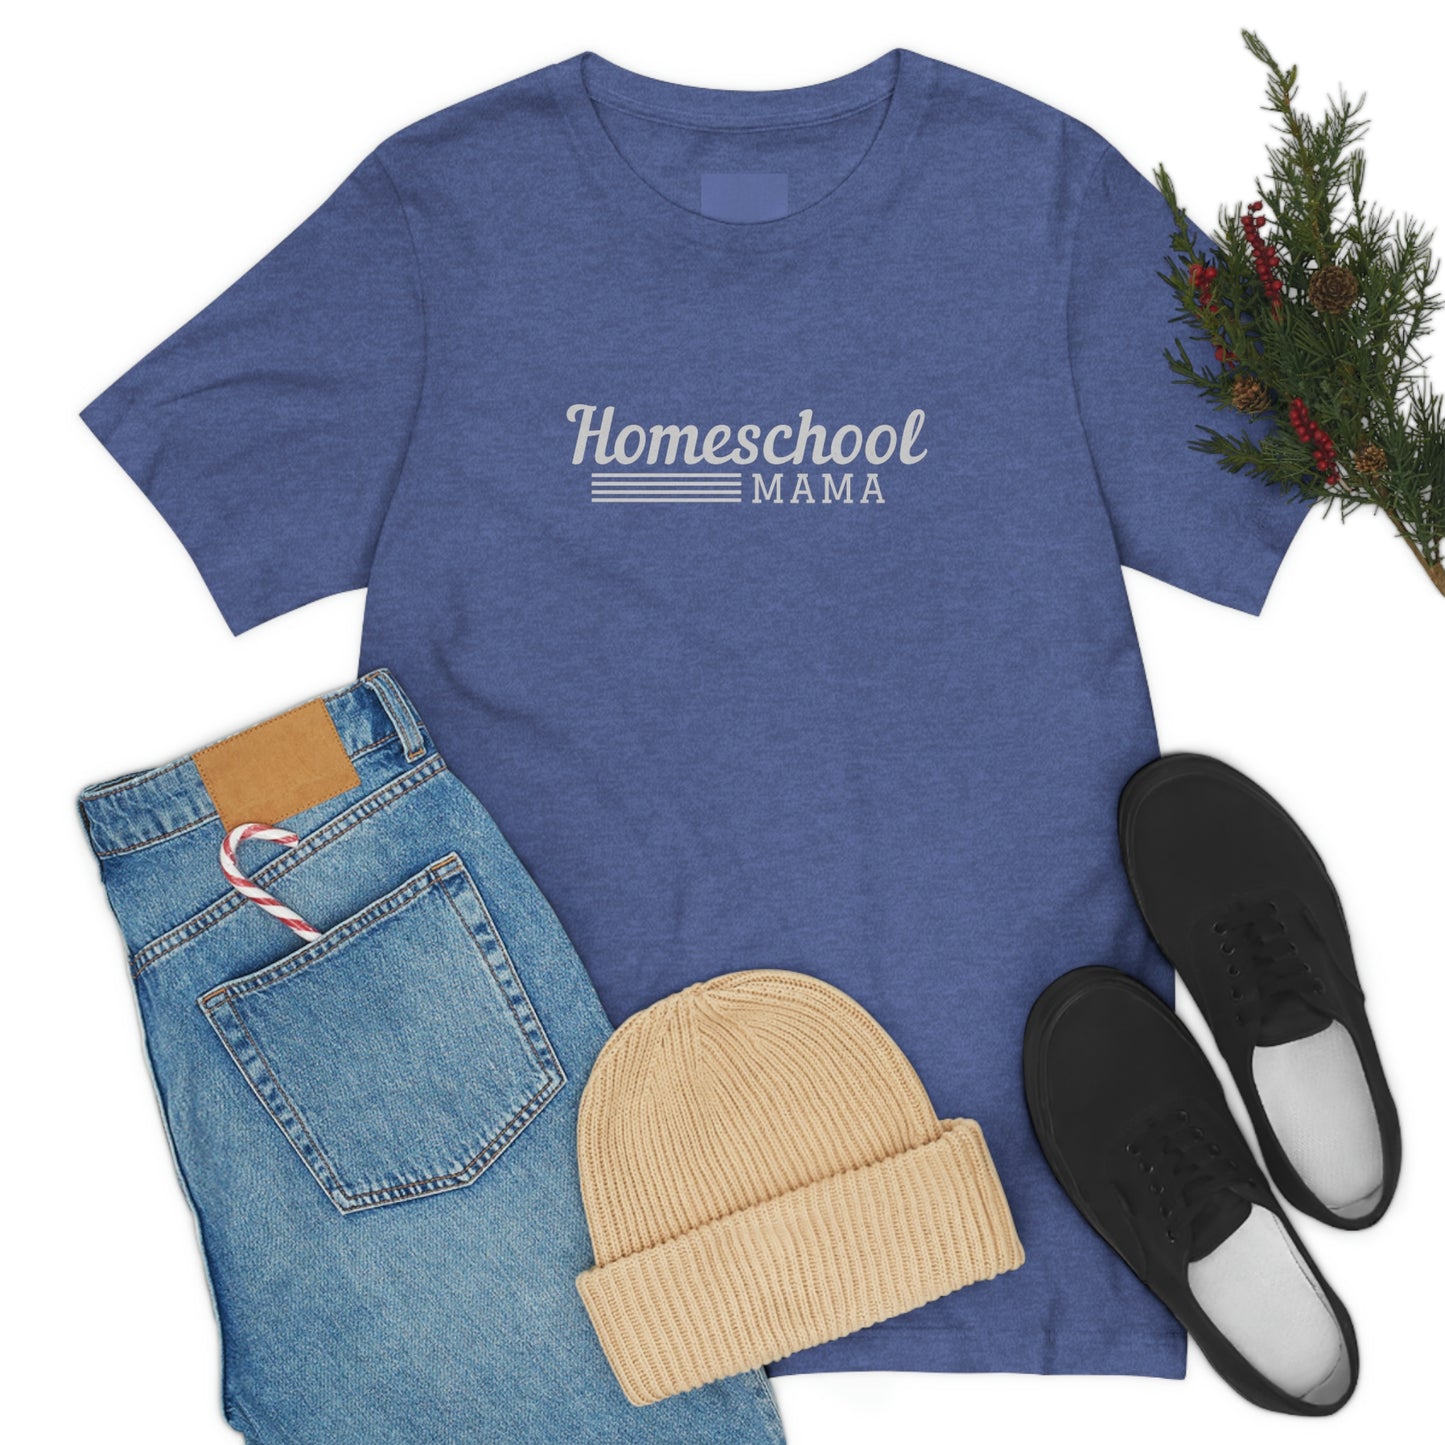 Homeschool mama T-Shirt